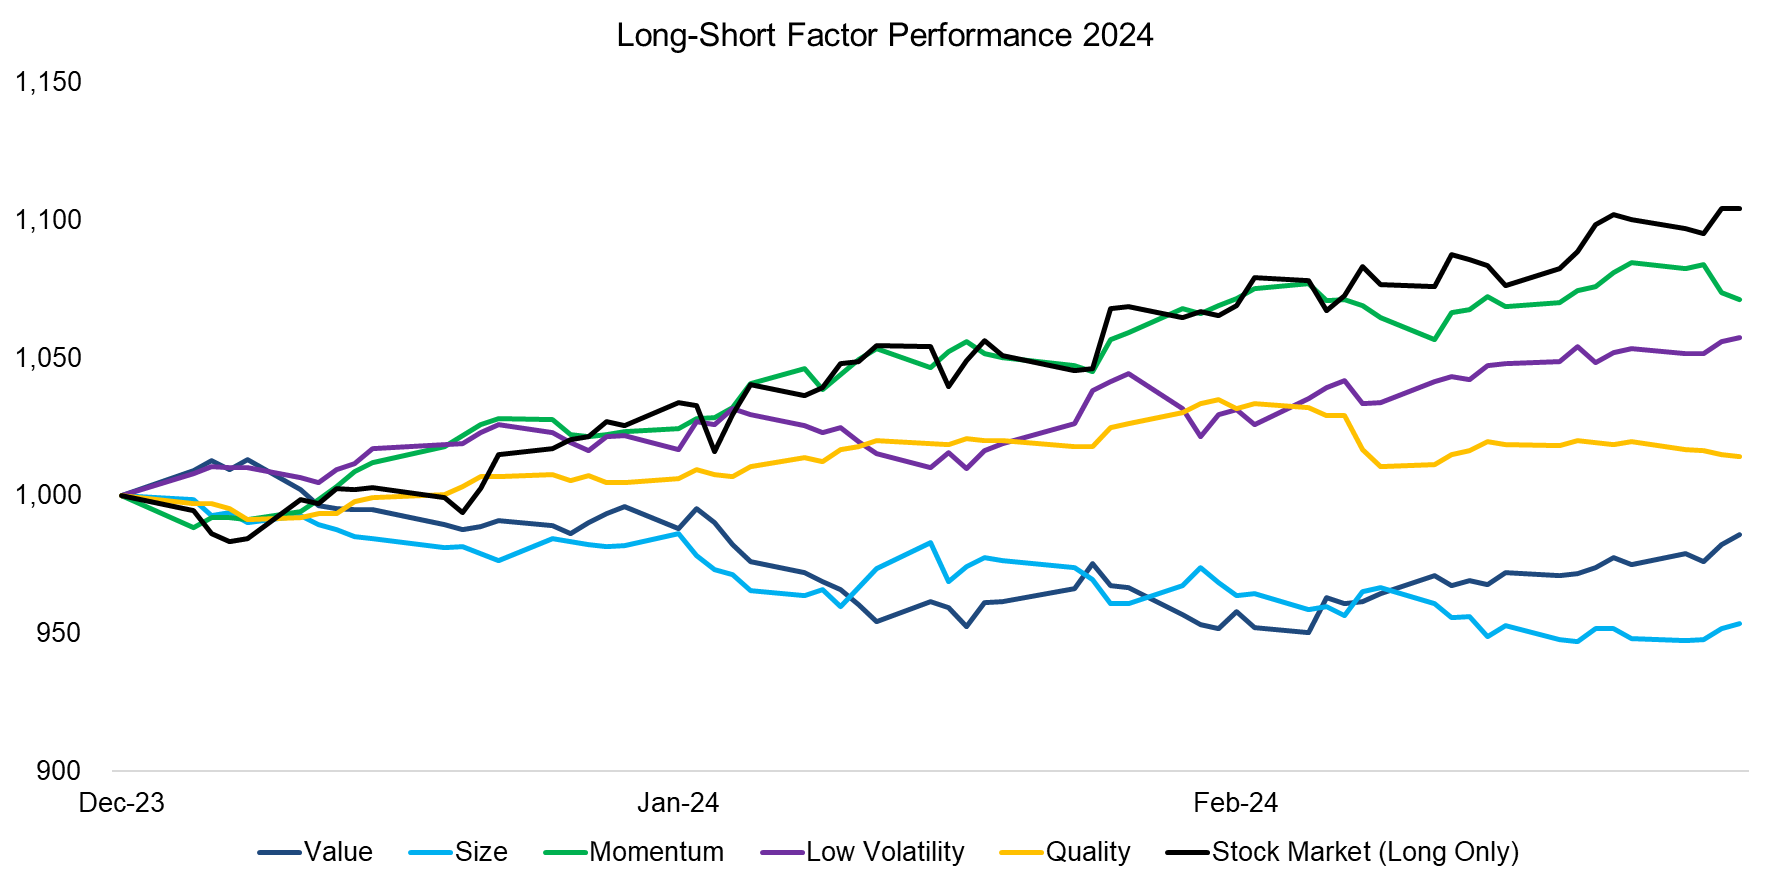 Long-Short Factor Performance 2024